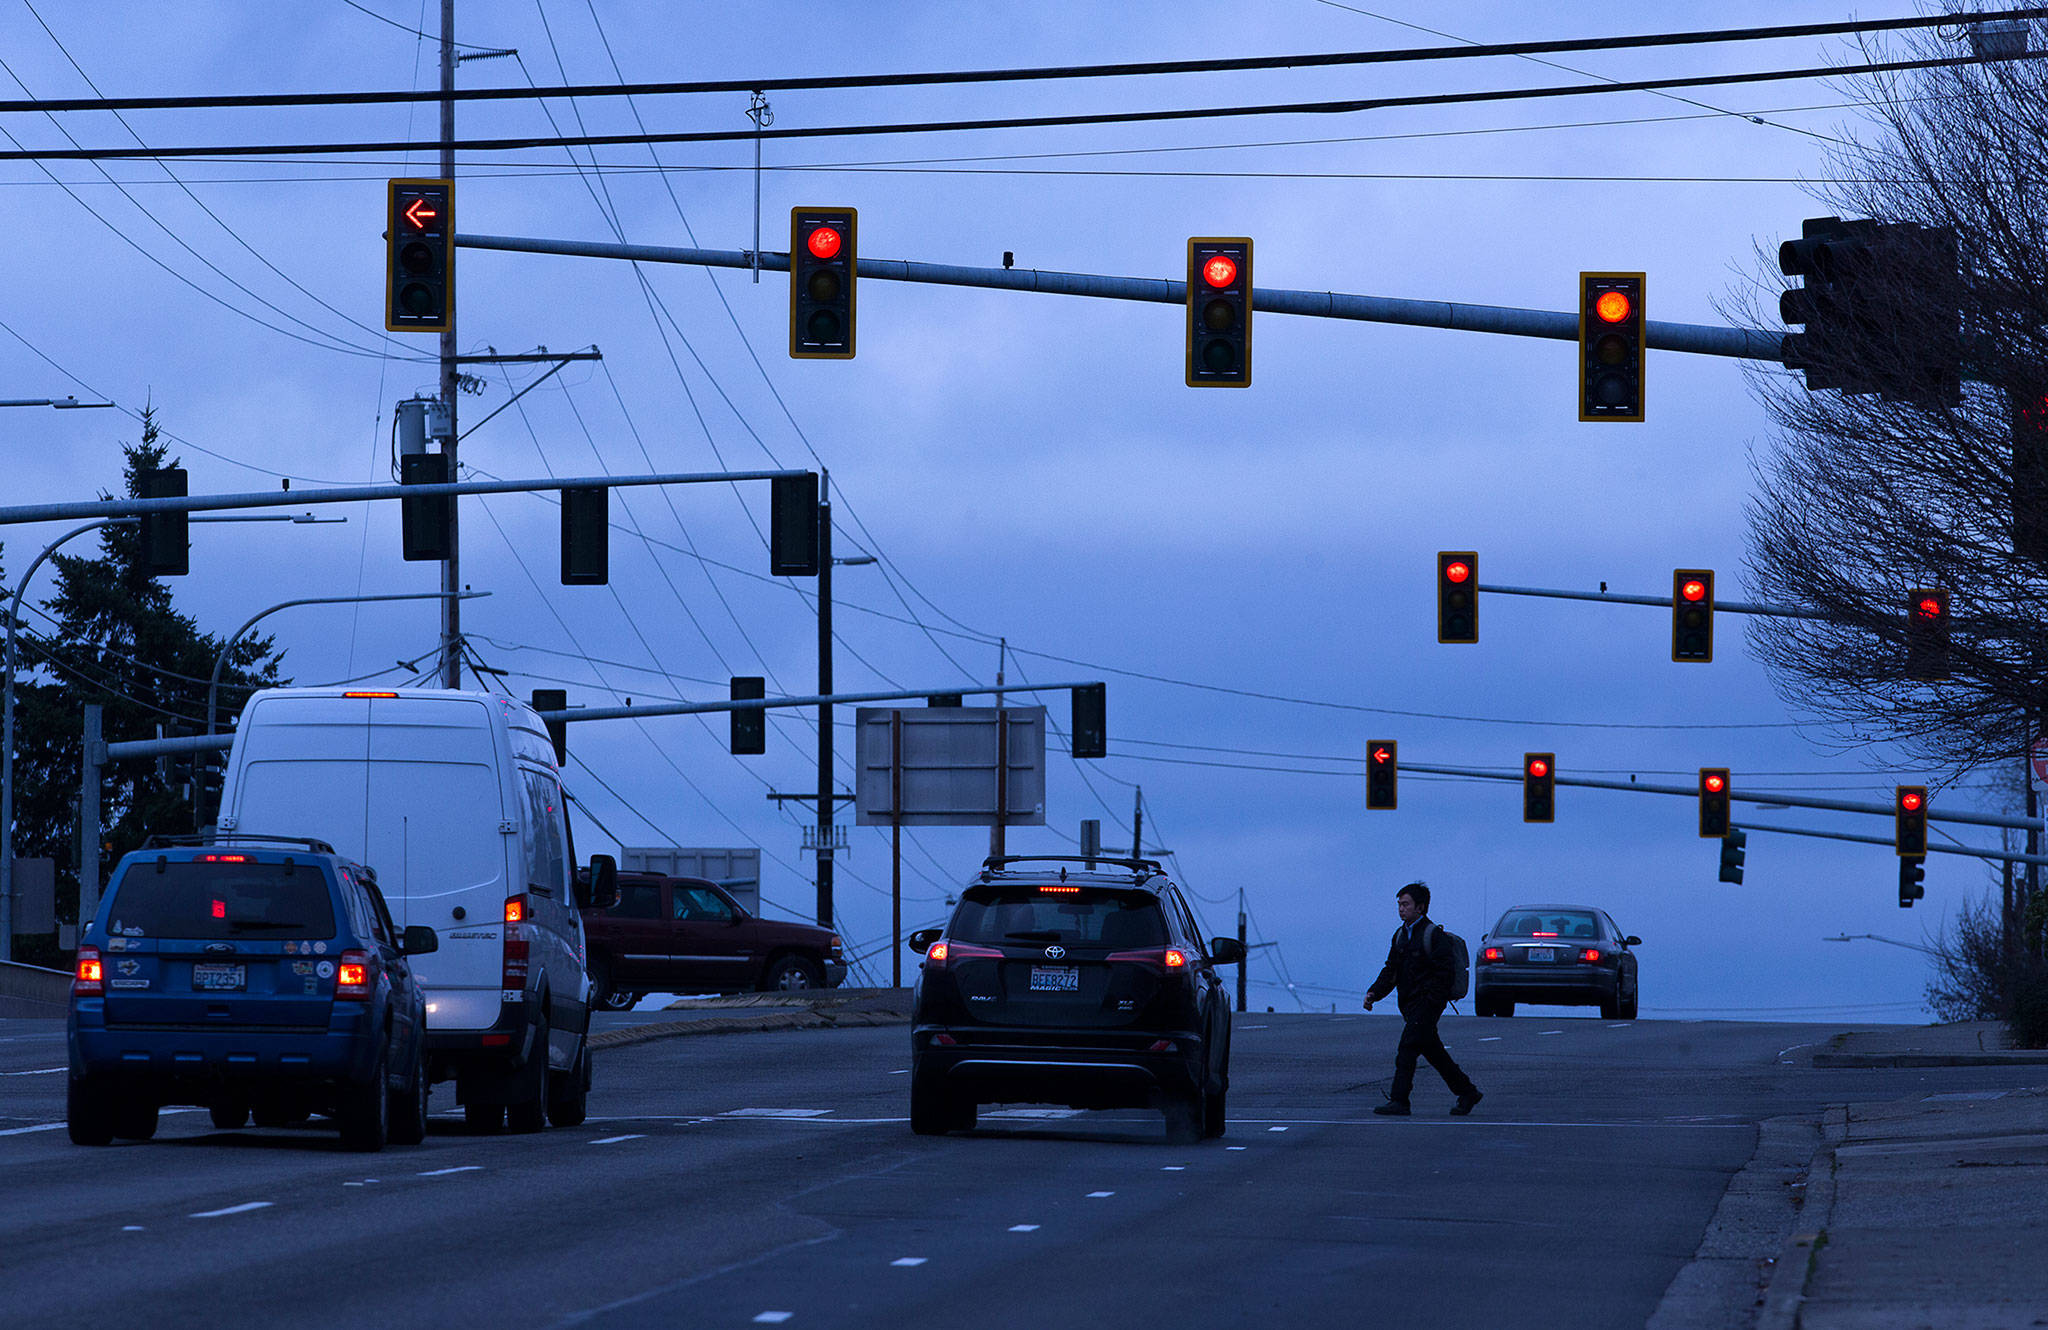 Traffic-enforcement cameras are on Everett council agenda | HeraldNet.com